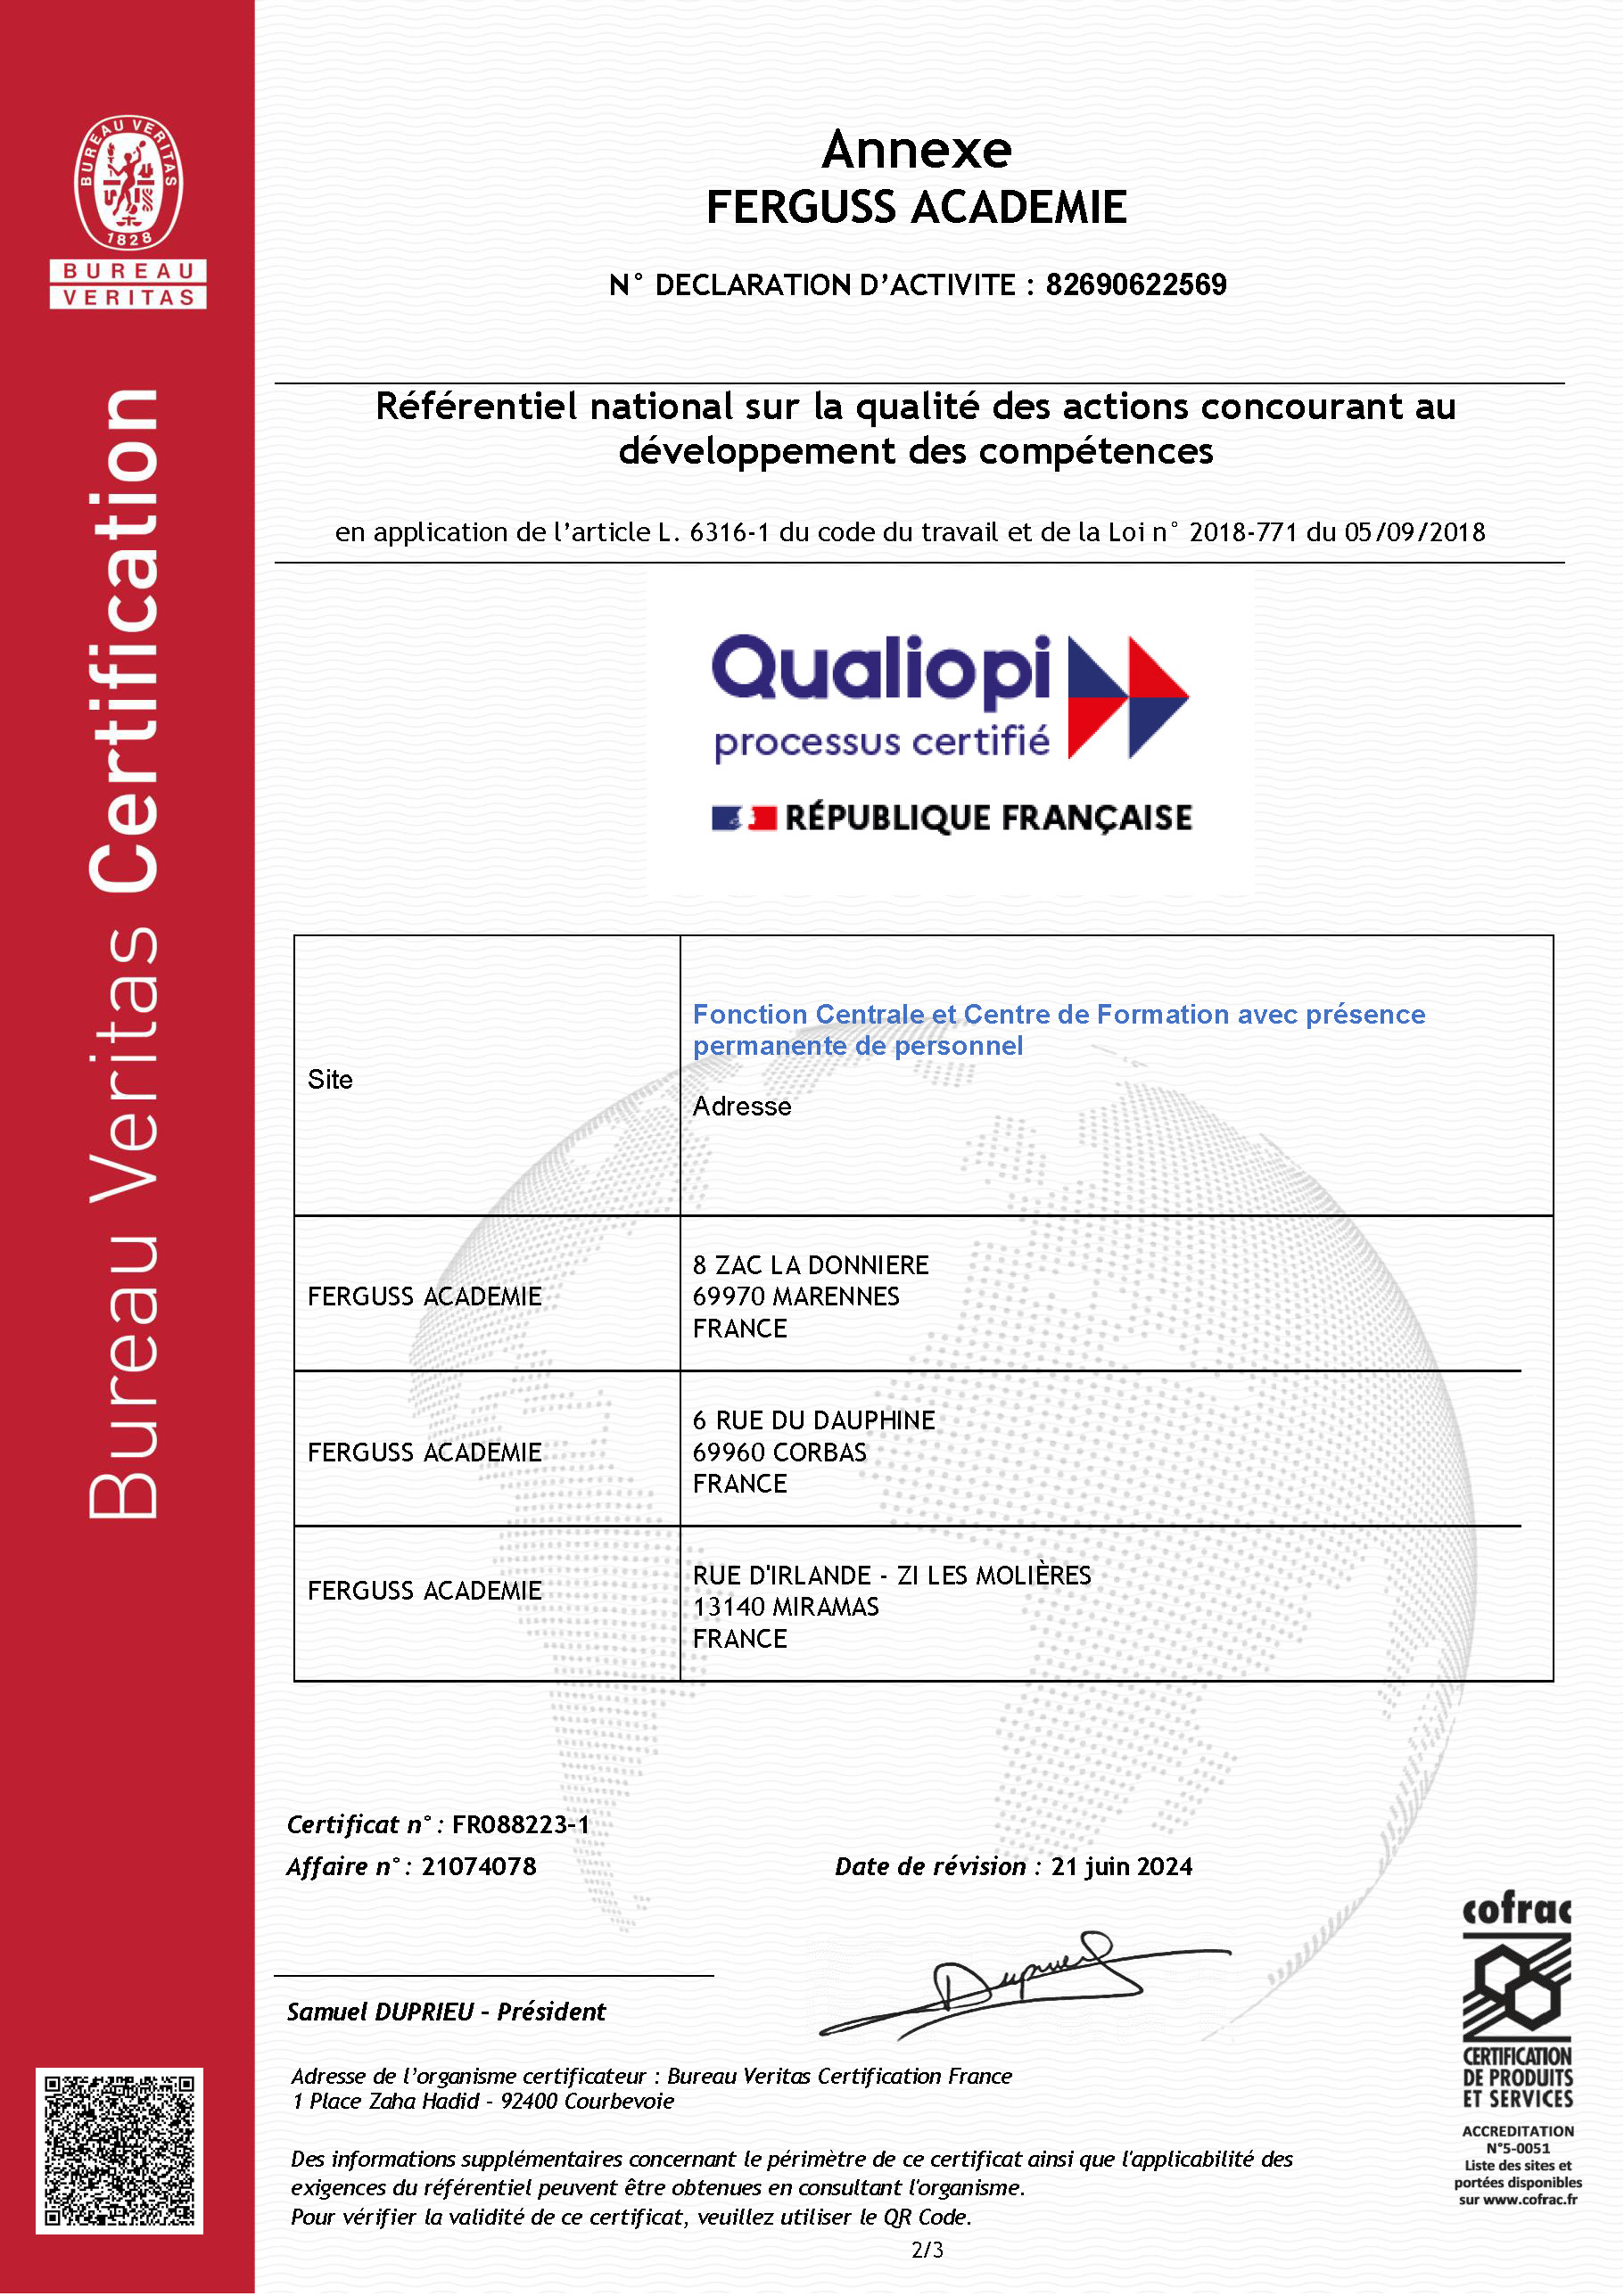 certificate---21074078---ferguss-academiepage2.jpg